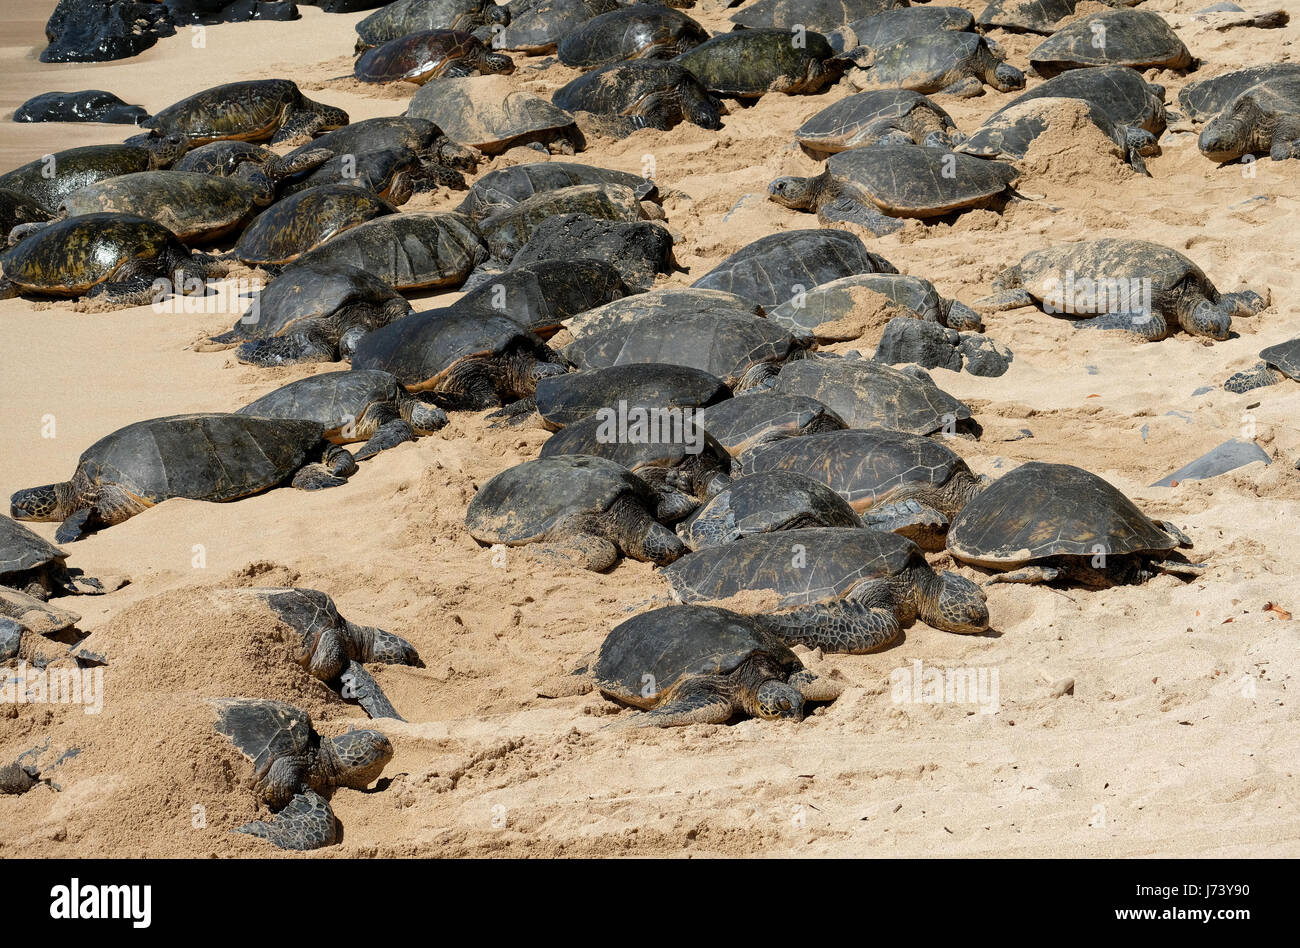 Green Sea Turtles (Chelonia mydas) resting on the beach at Ho'okipa Beach Park, Paia, Maui, Hawaii. Stock Photo